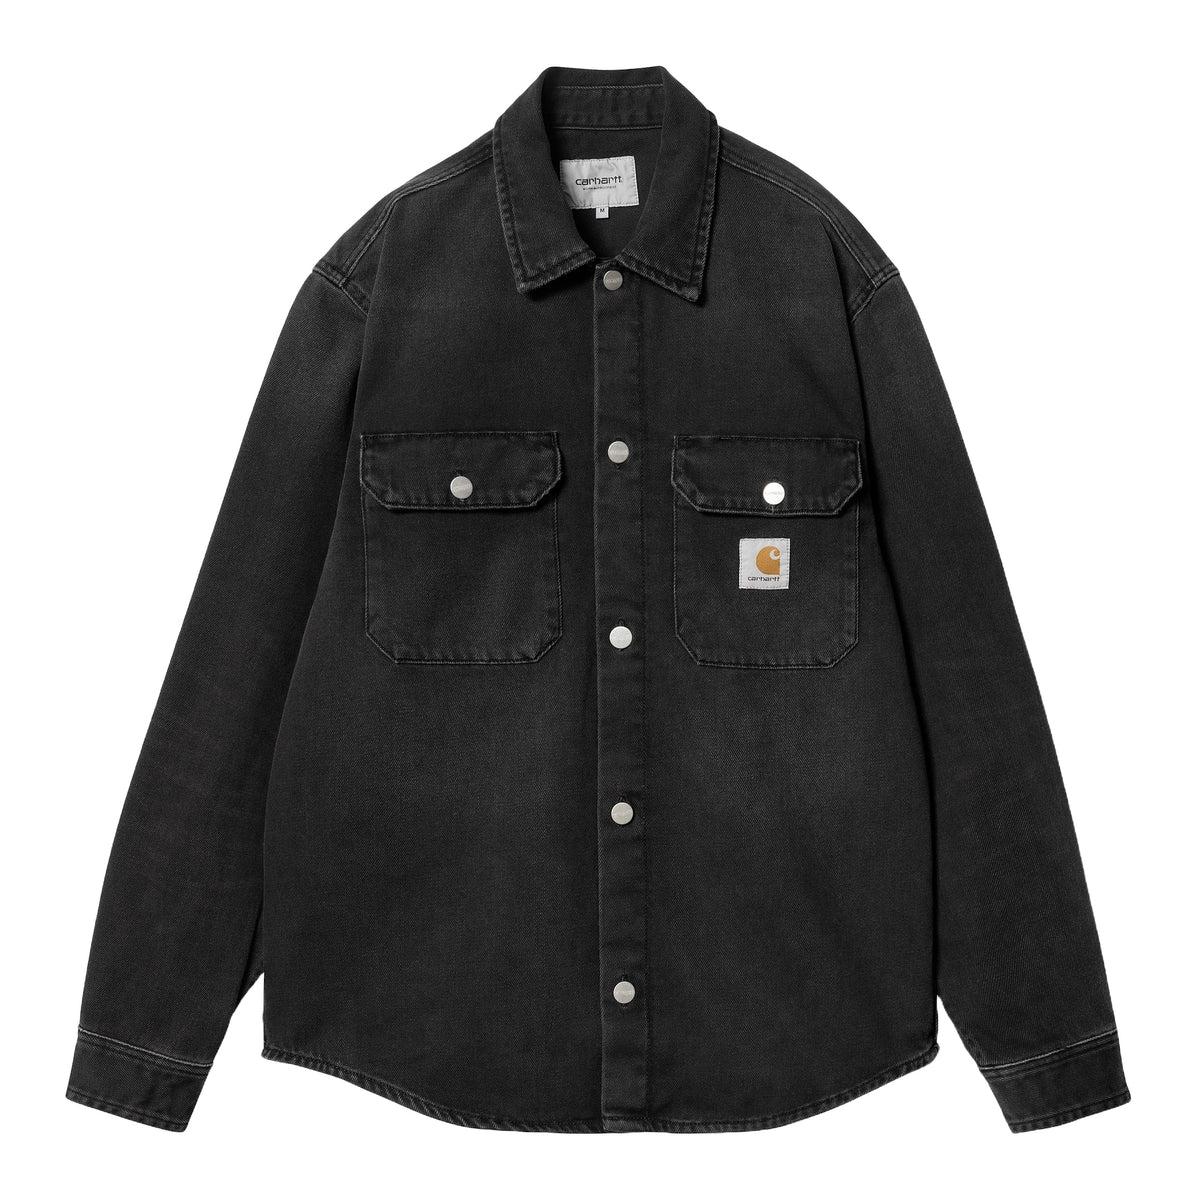 Carhartt Wip Men's Harvey Jacket jeans shirt black